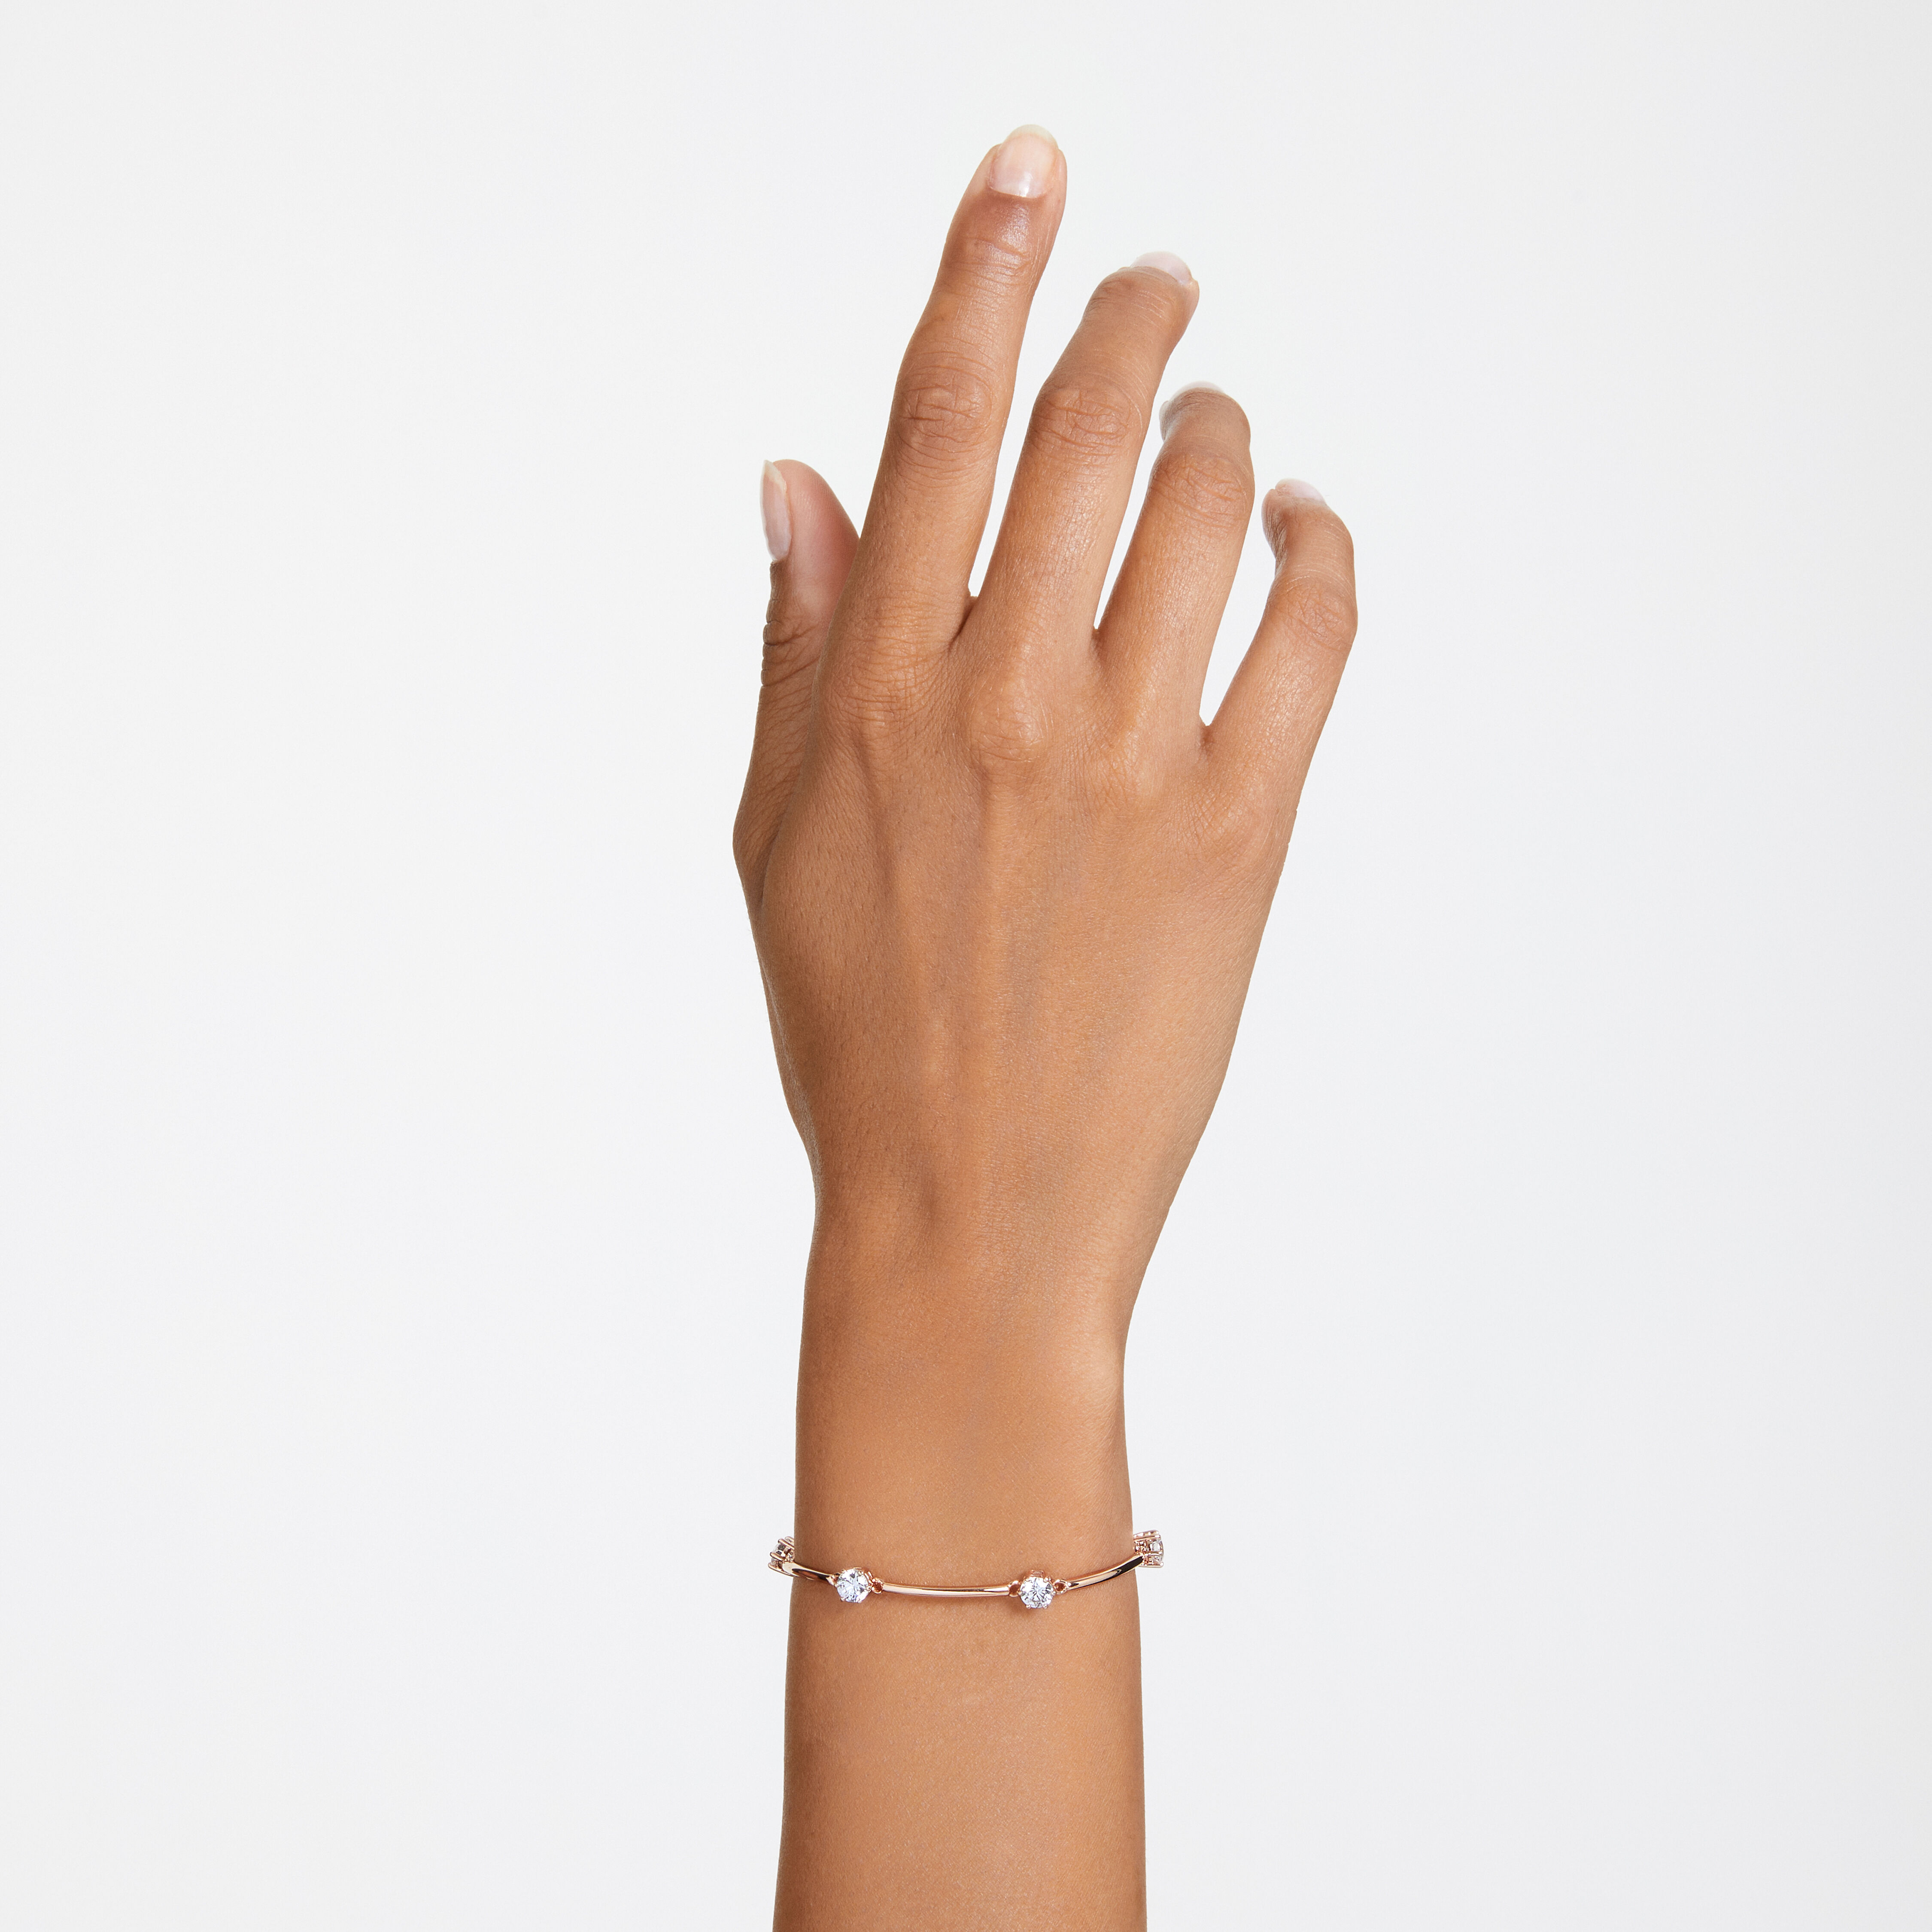 Get the Perfect Swarovski Crystal Bracelets | GLAMIRA.in